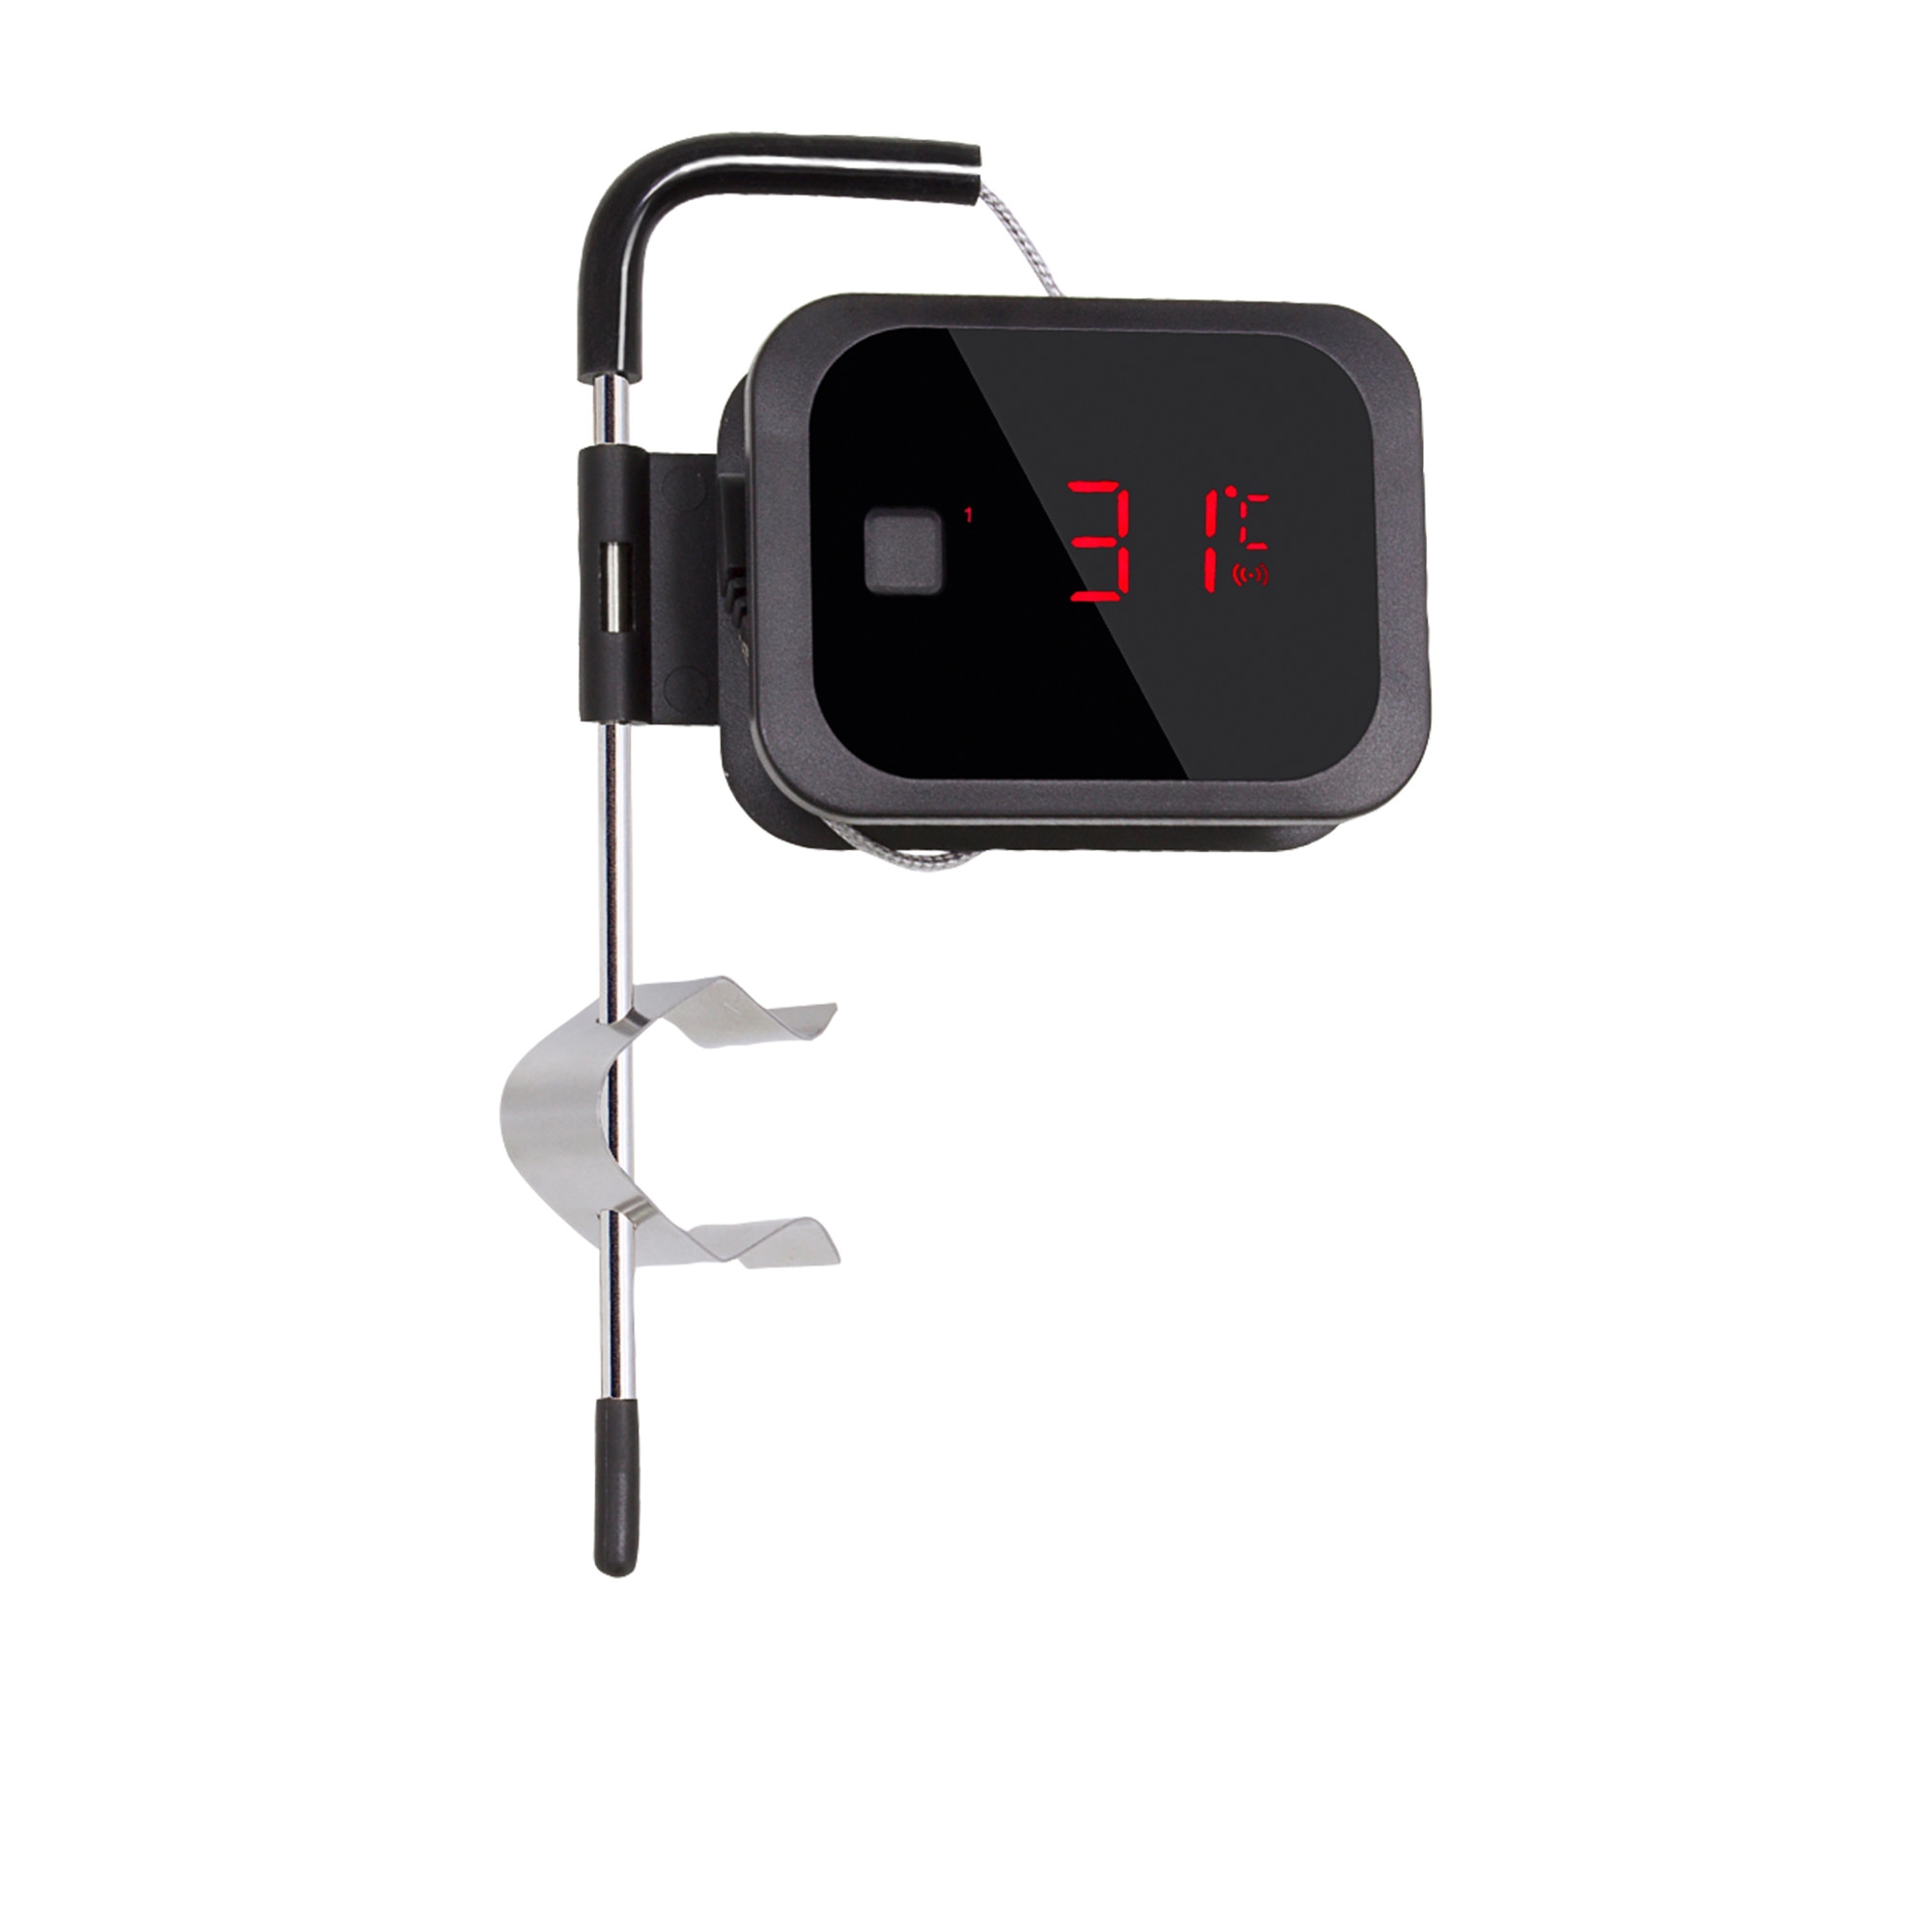 Inkbird IBT-2X Digital Bluetooth Wireless Thermometer 2 Probe Image 2